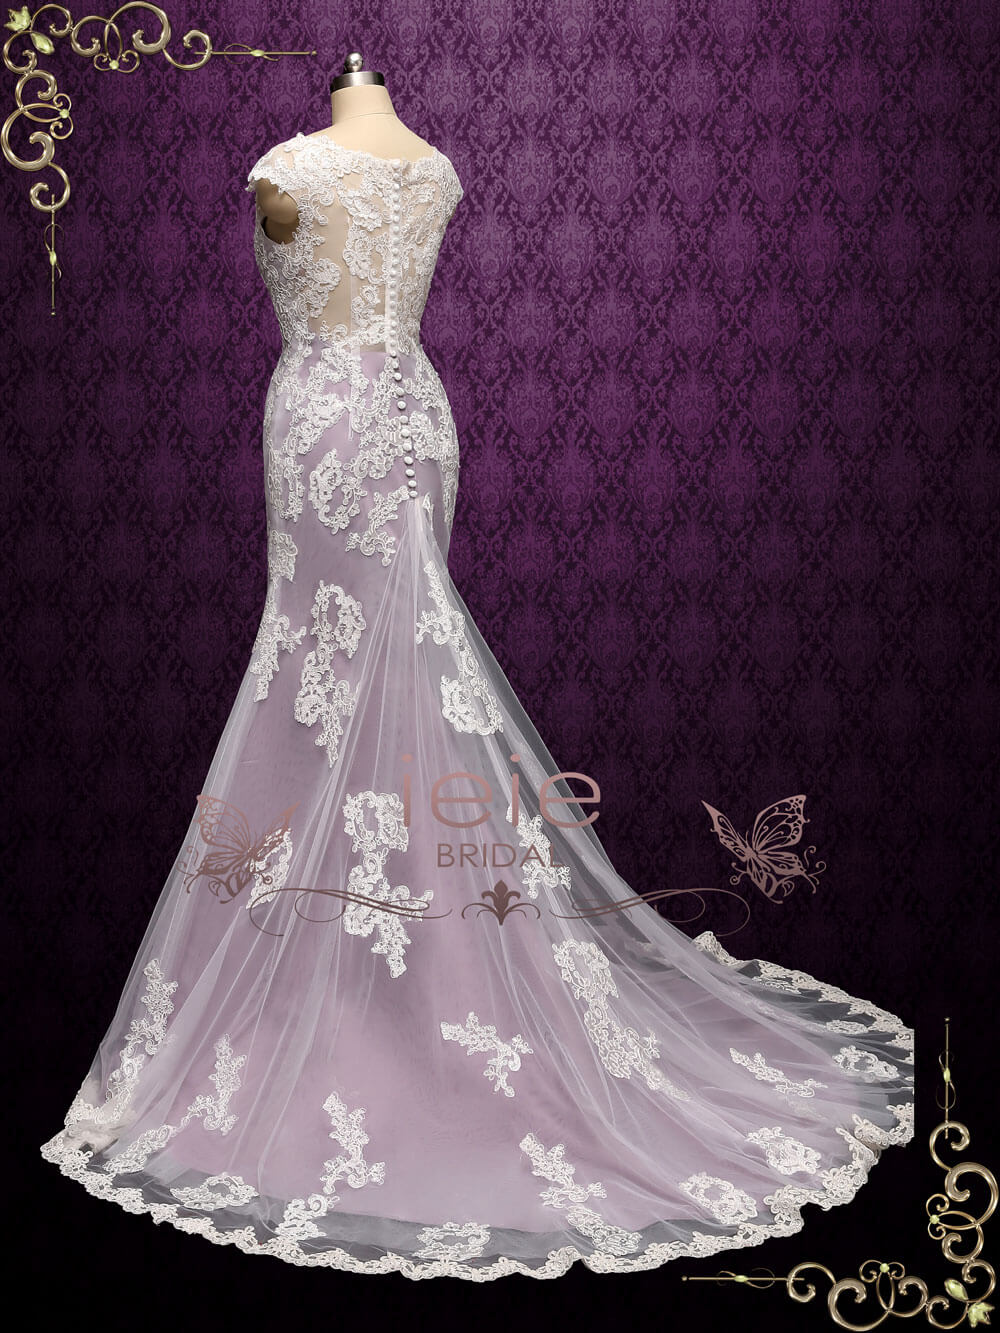 purple mermaid wedding dress